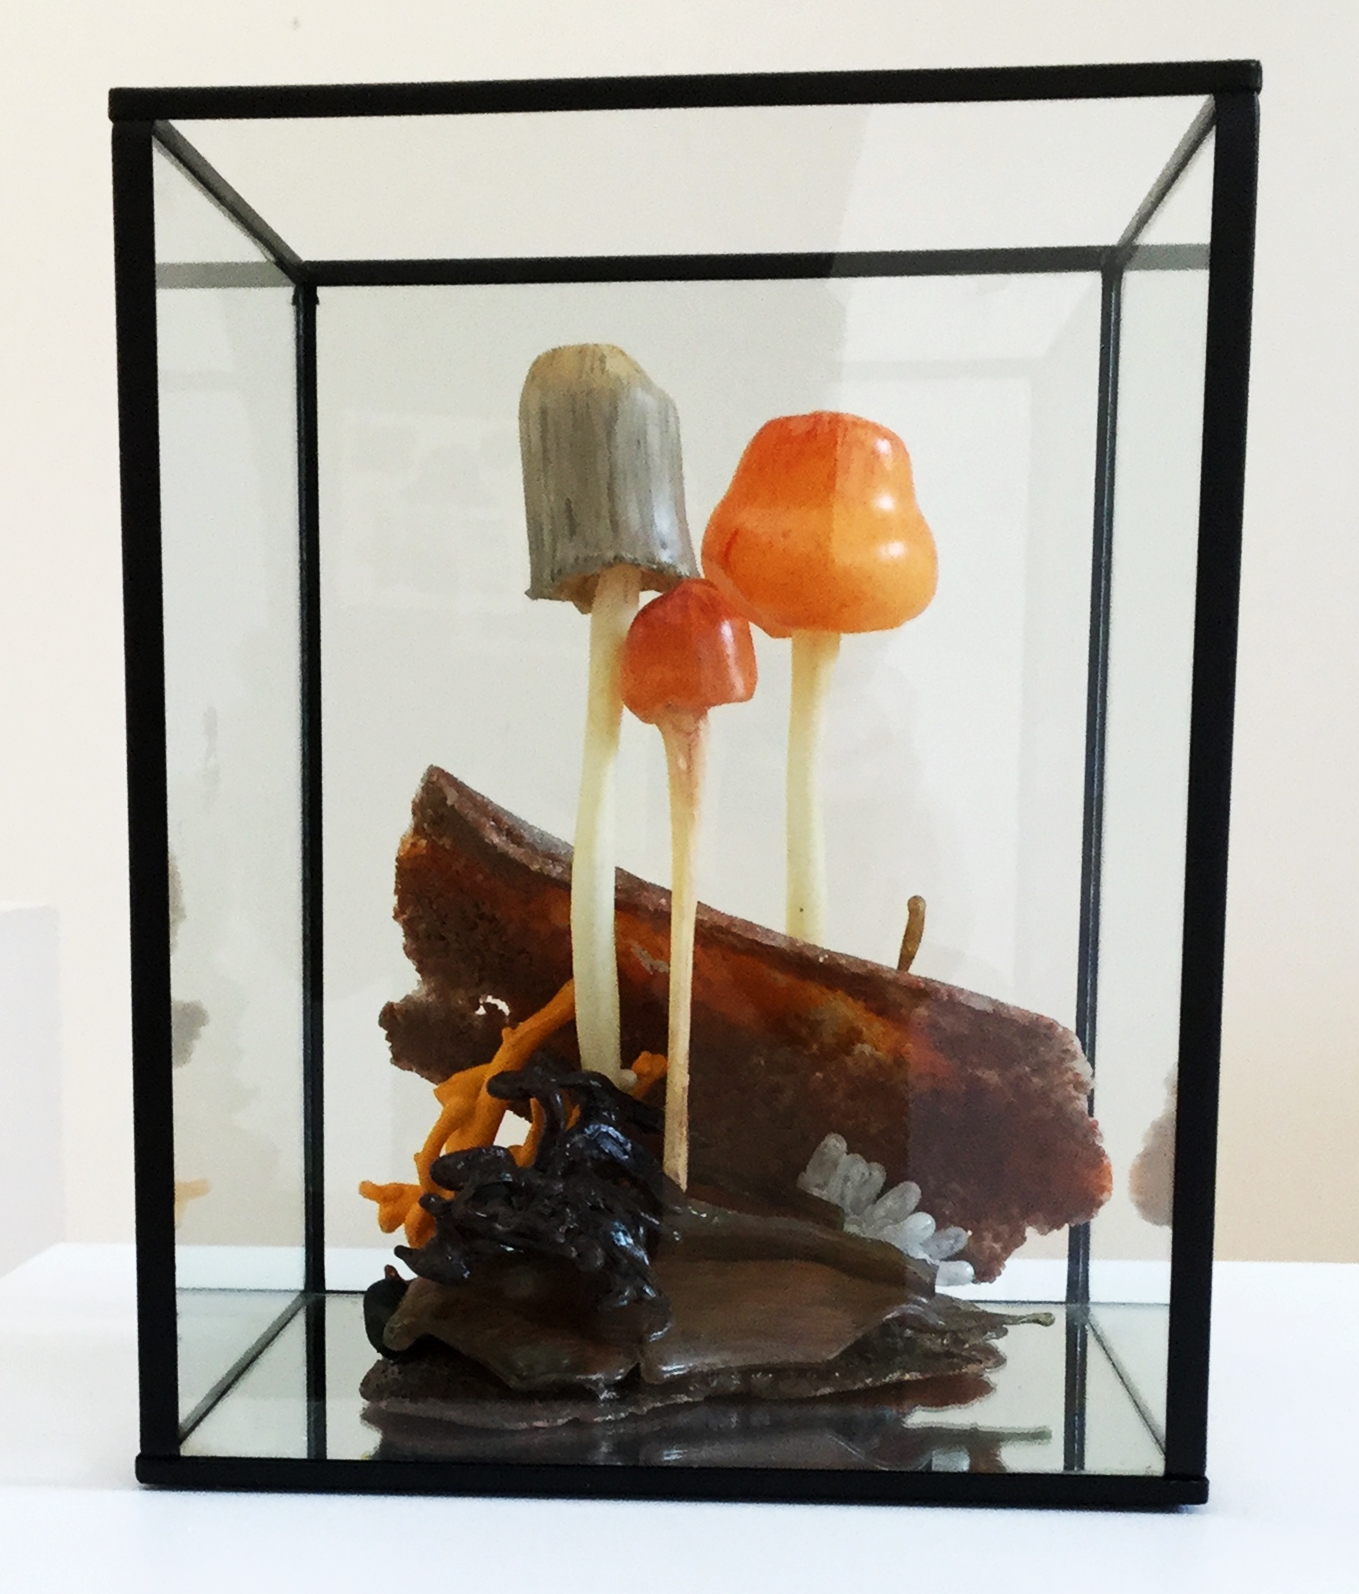 A presentation case of glass art mushrooms by Helene Boyer in her Artist Profile for Art Trails Tasmania